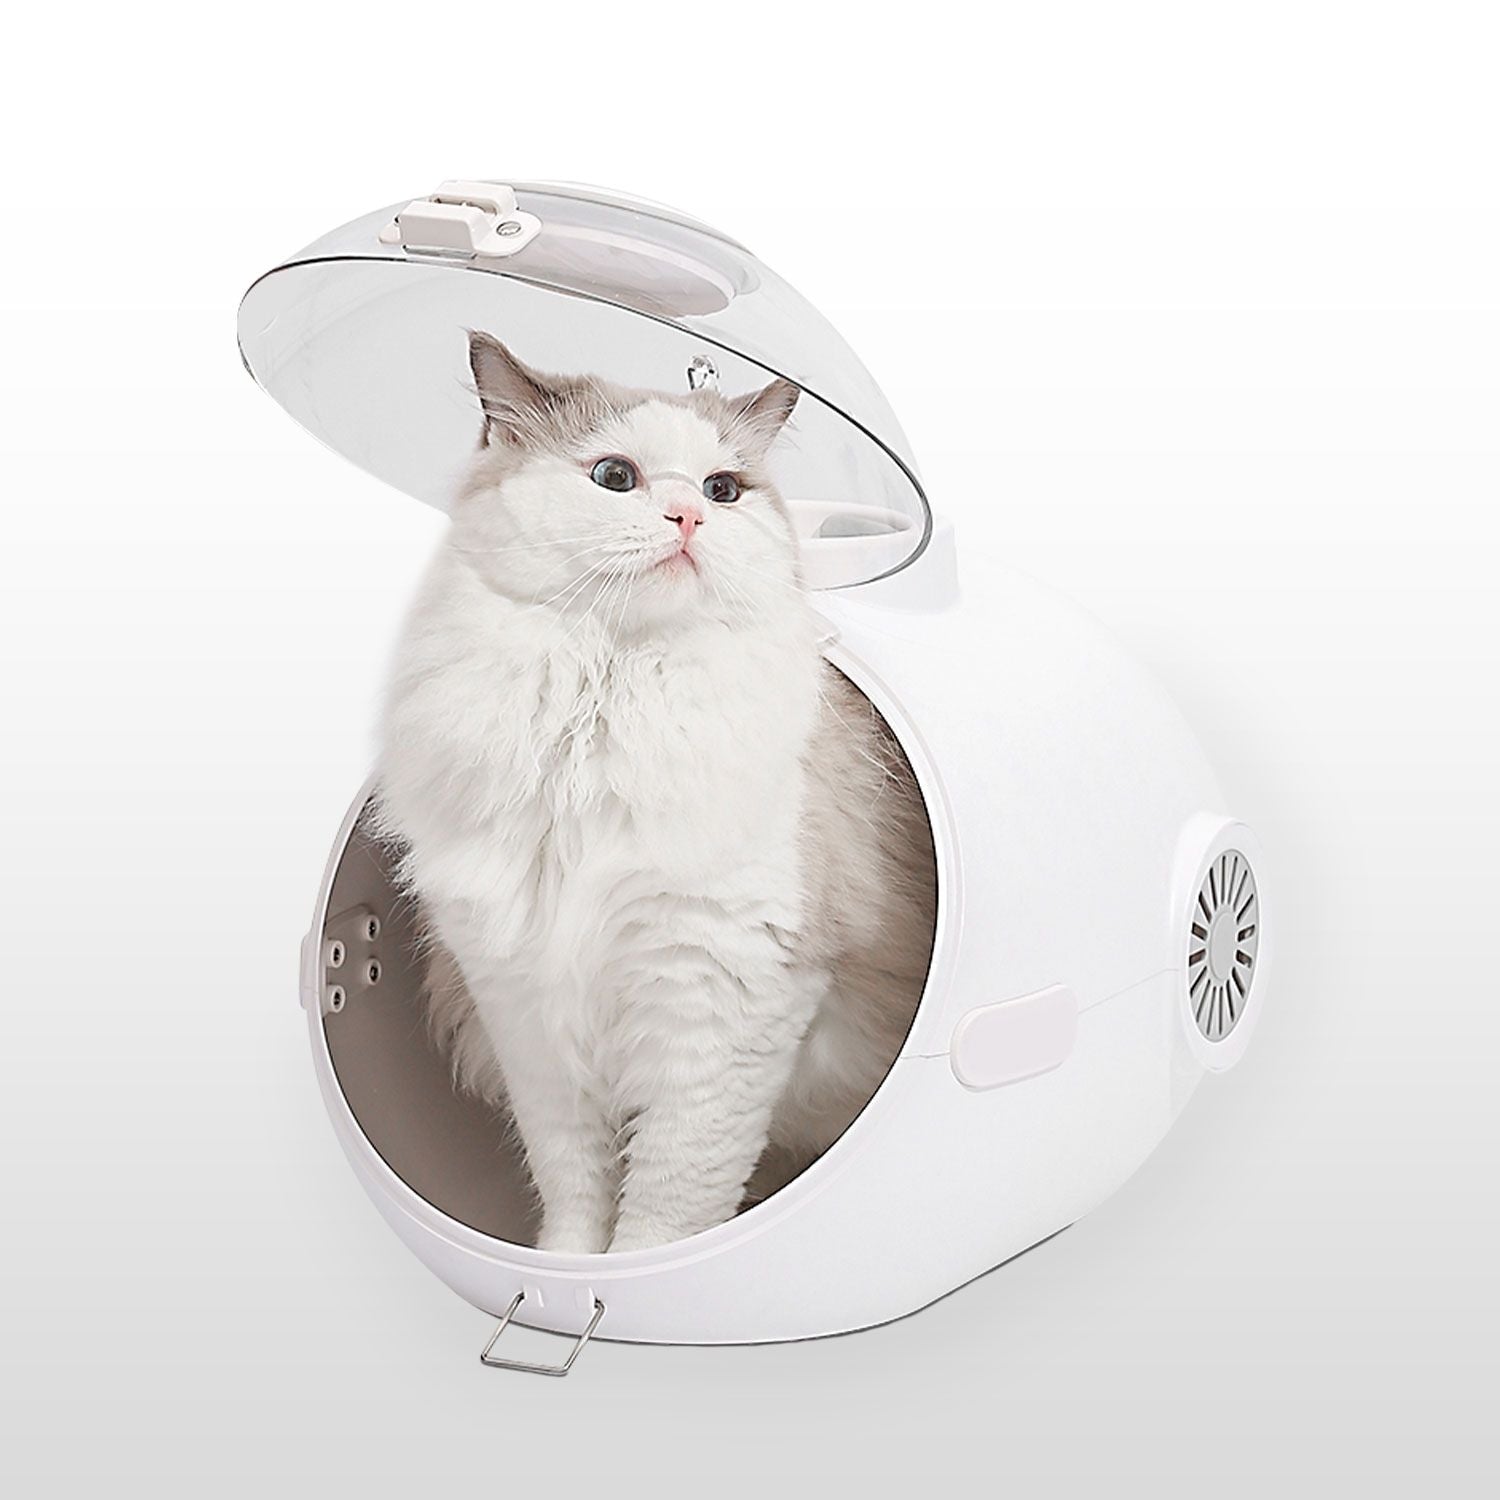 FLOOFI Smart Pet Carrier (White)